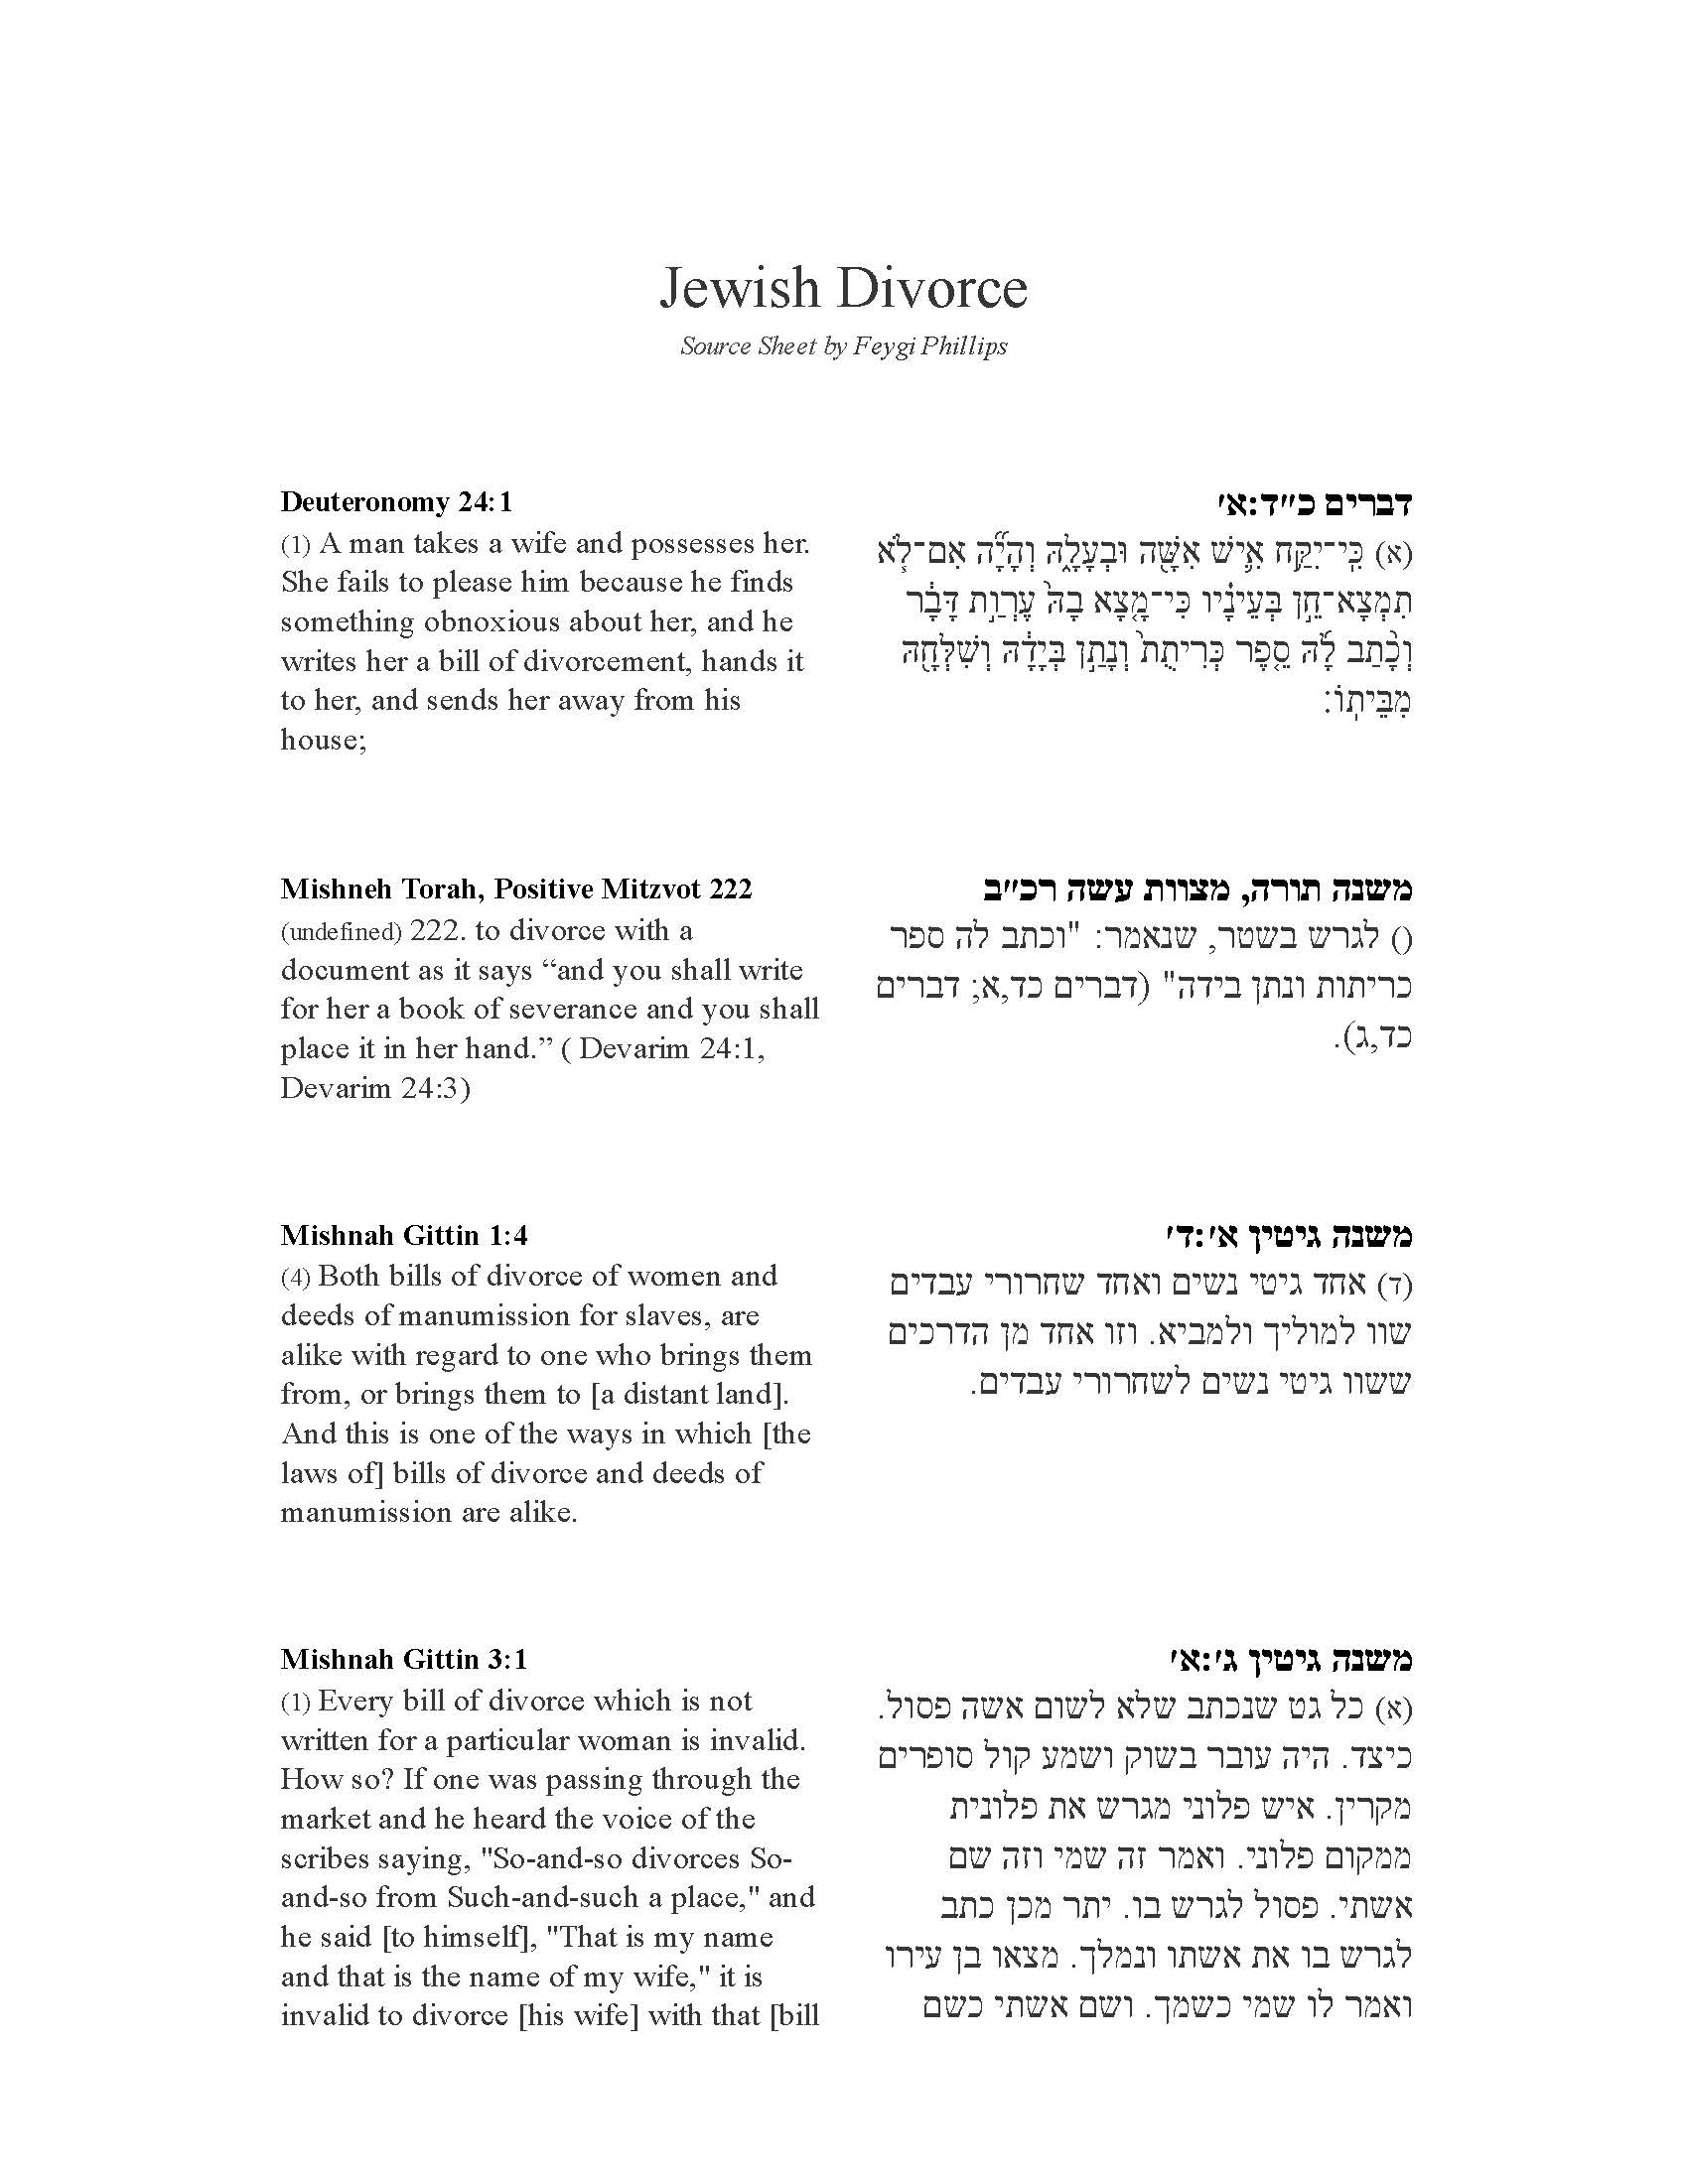 Jewish Divorce Source Sheet p. 1